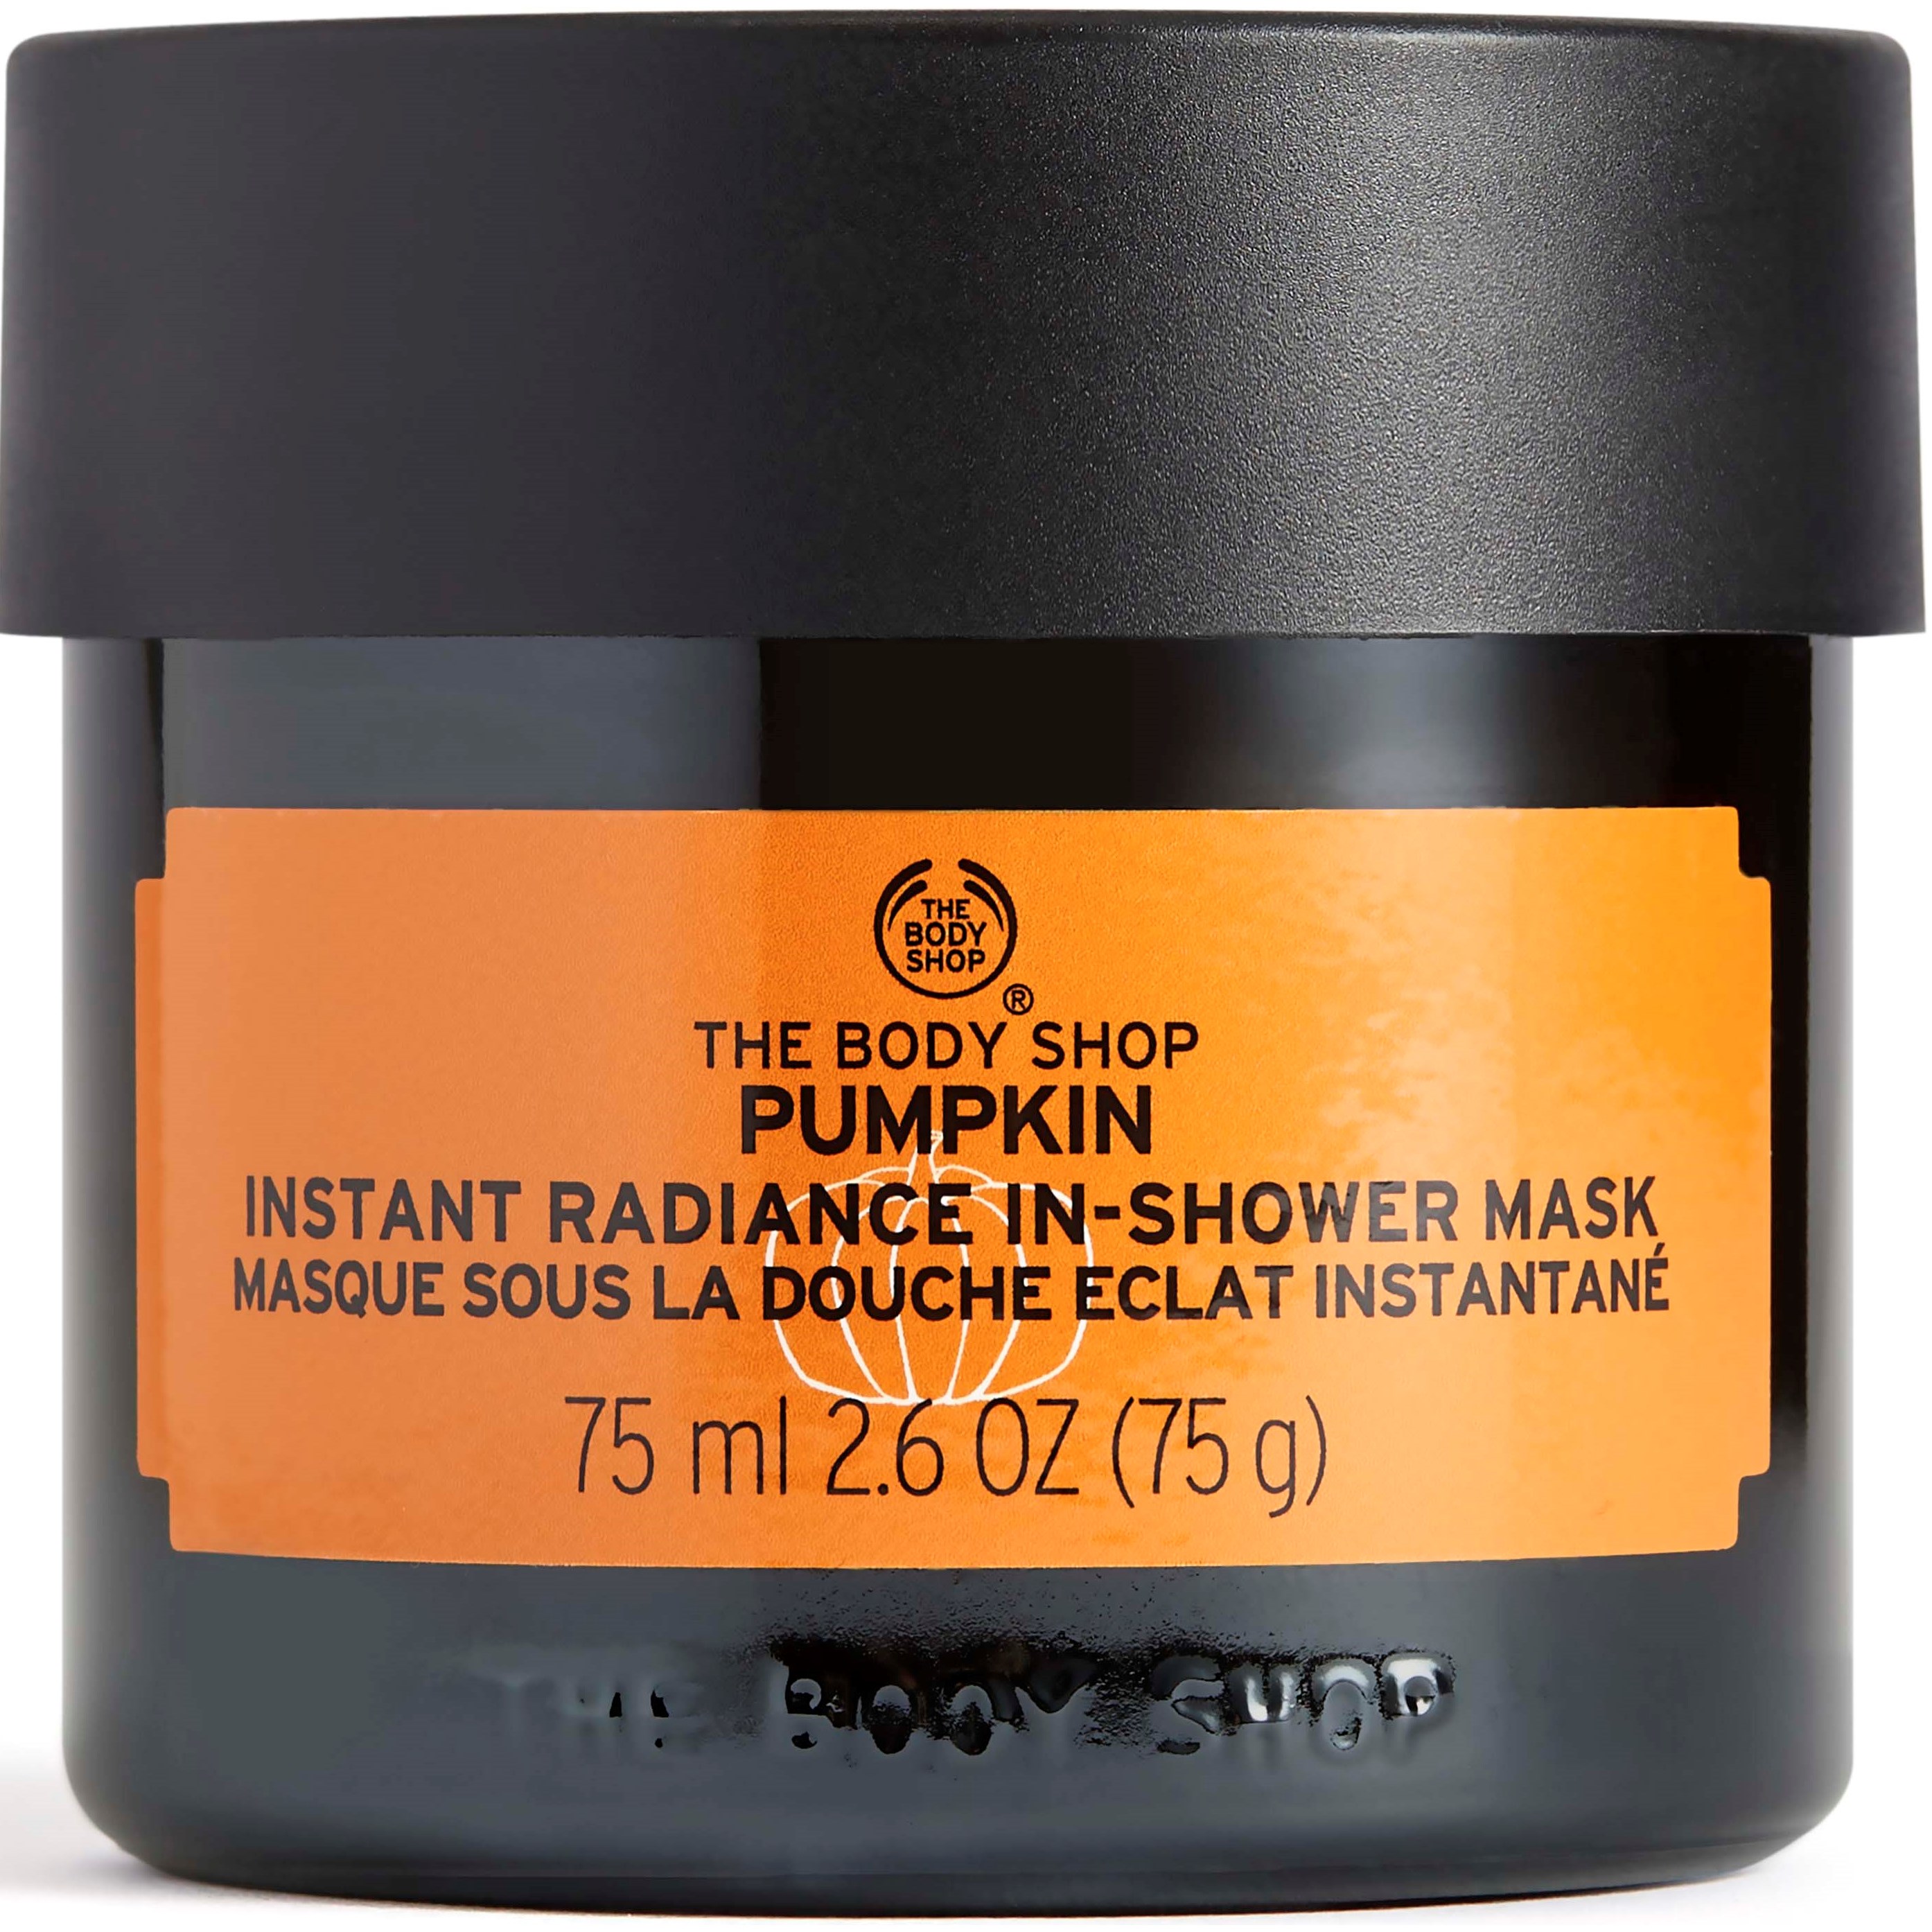 The Body Shop Pumpkin Radiance In-Shower Mask 75 ml